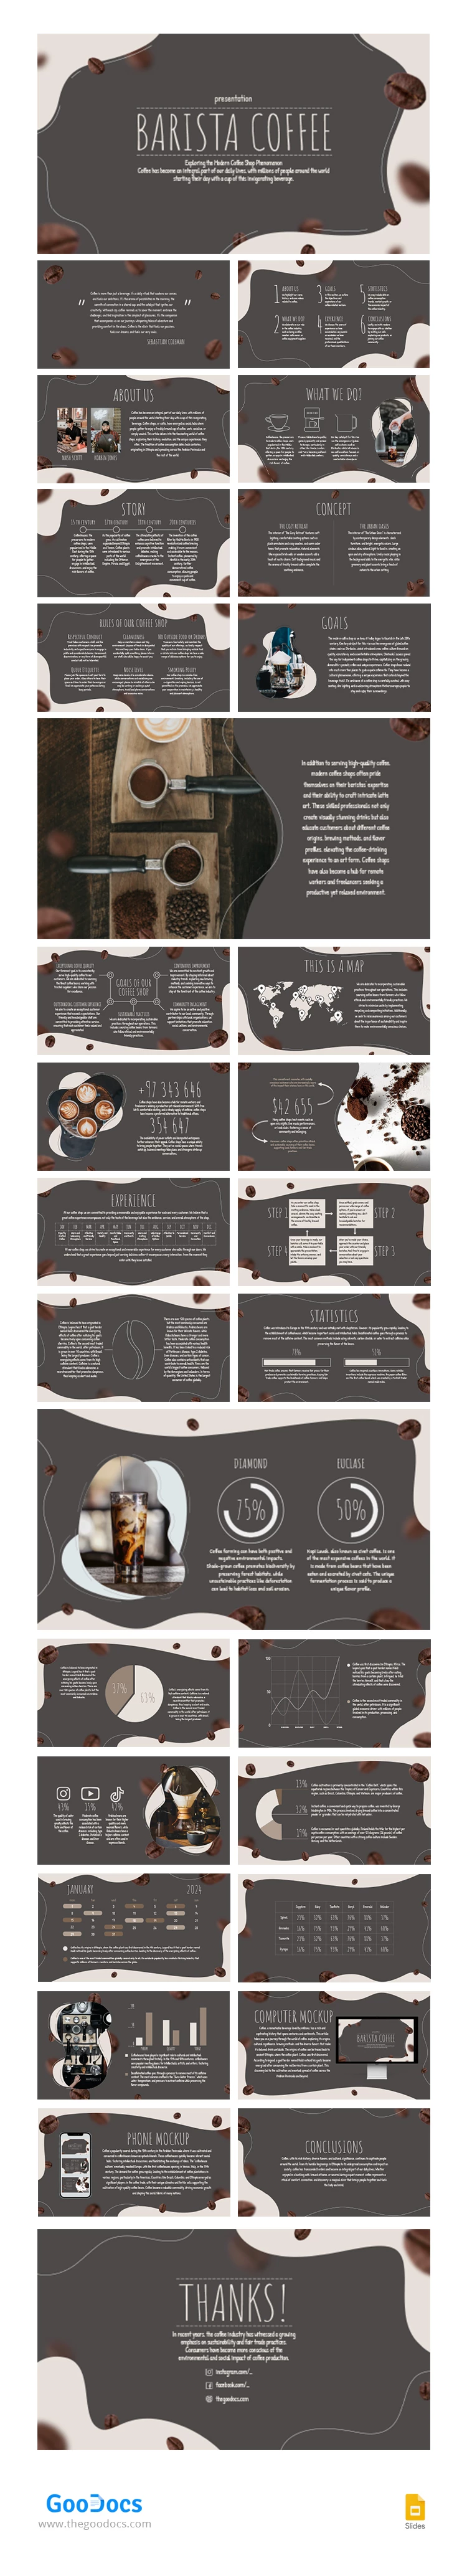 Caffè marrone minimalista - free Google Docs Template - 10067016